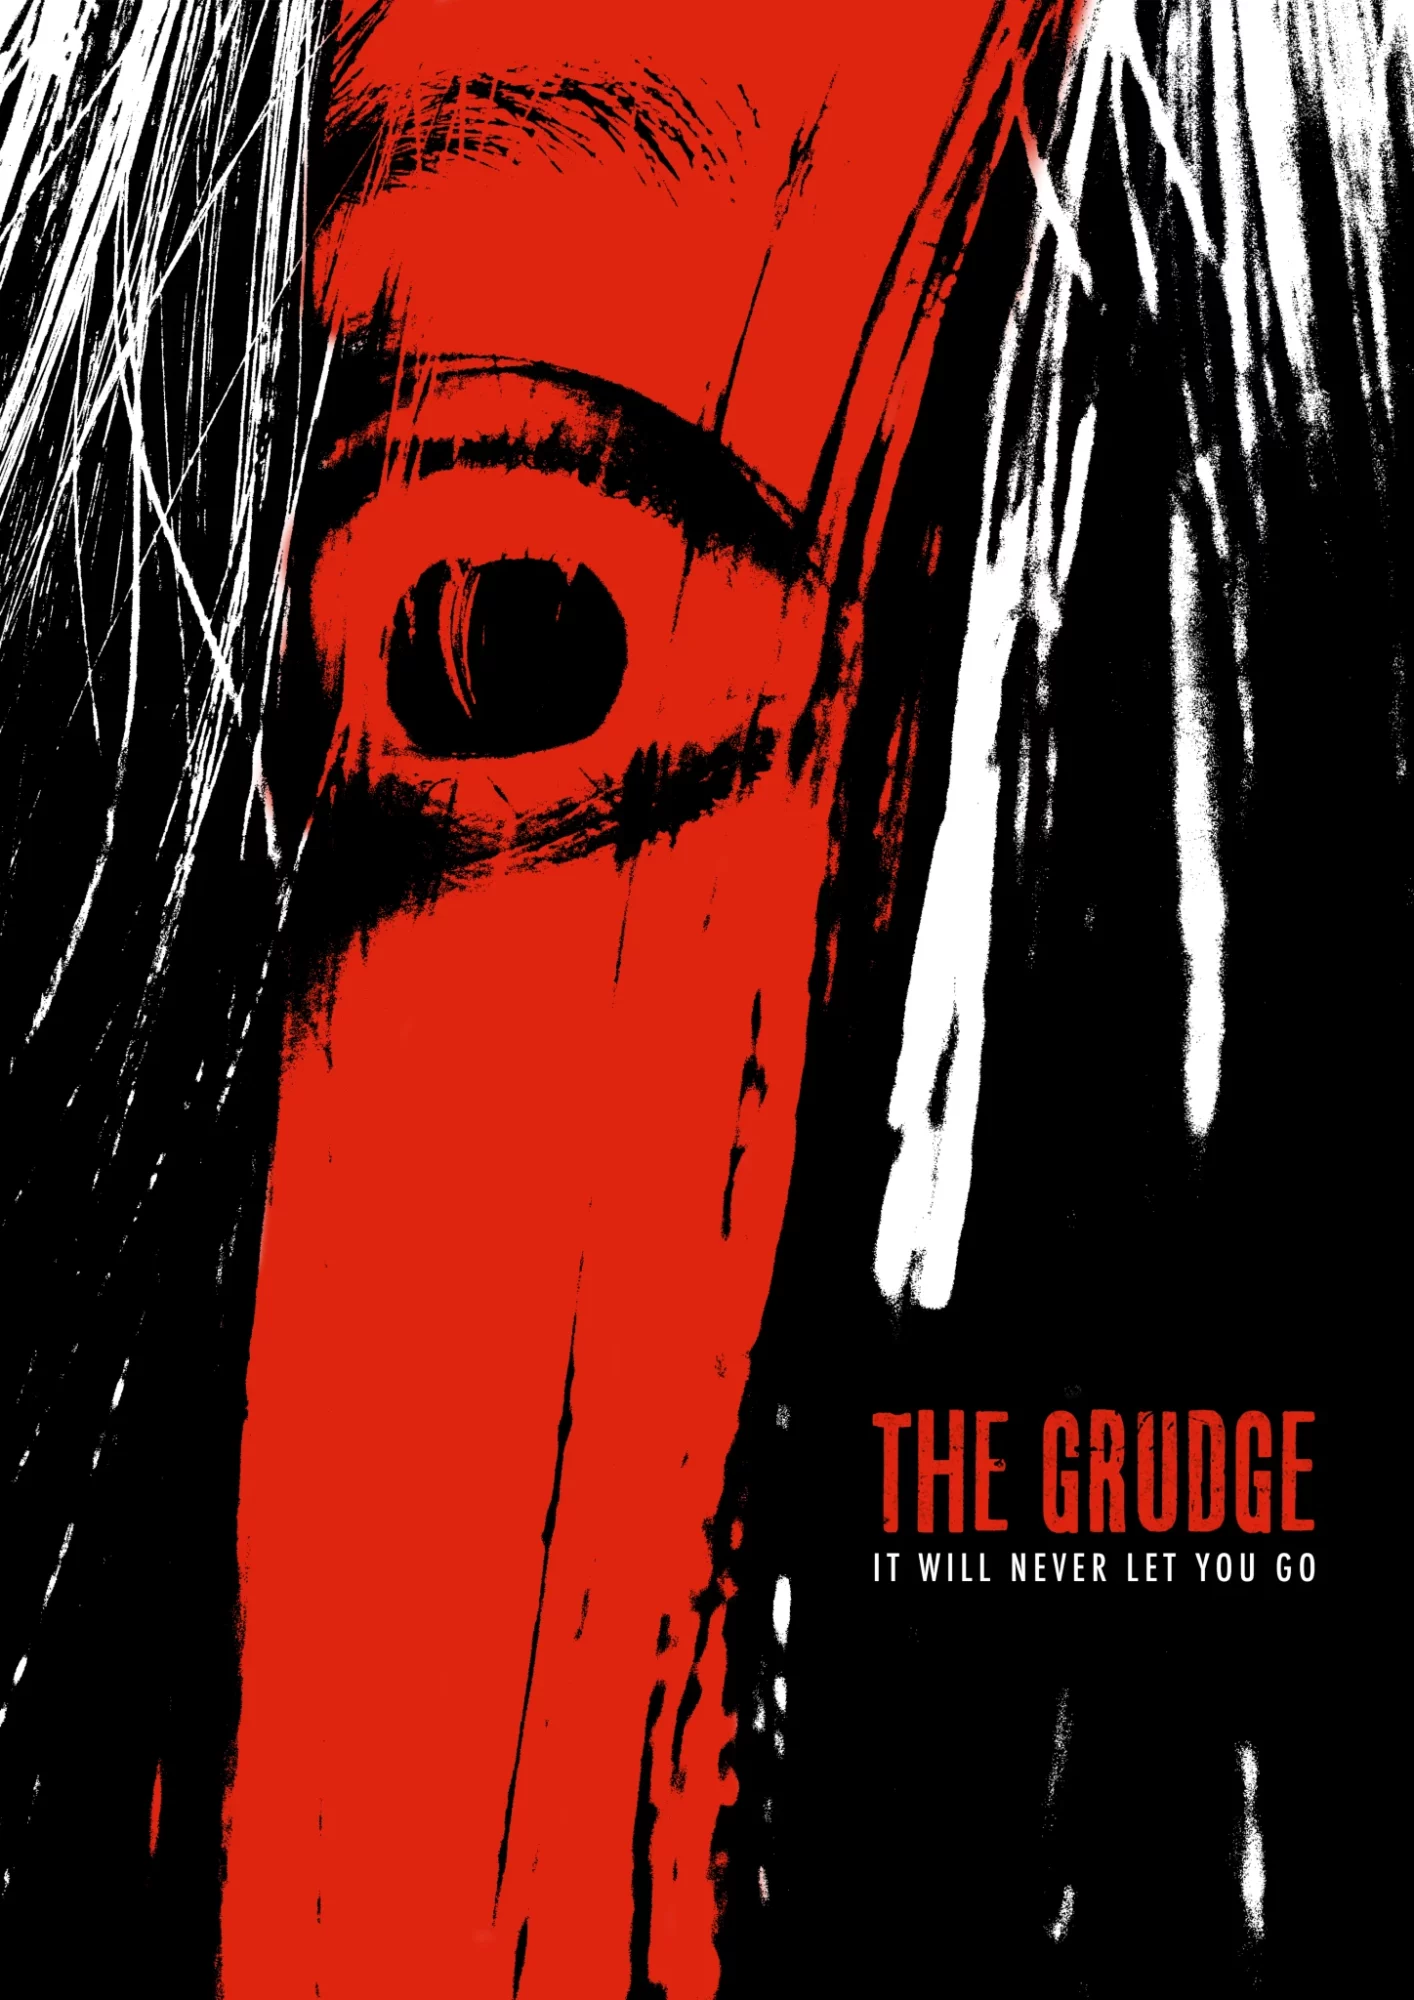 The Grudge – Alternative Poster Art